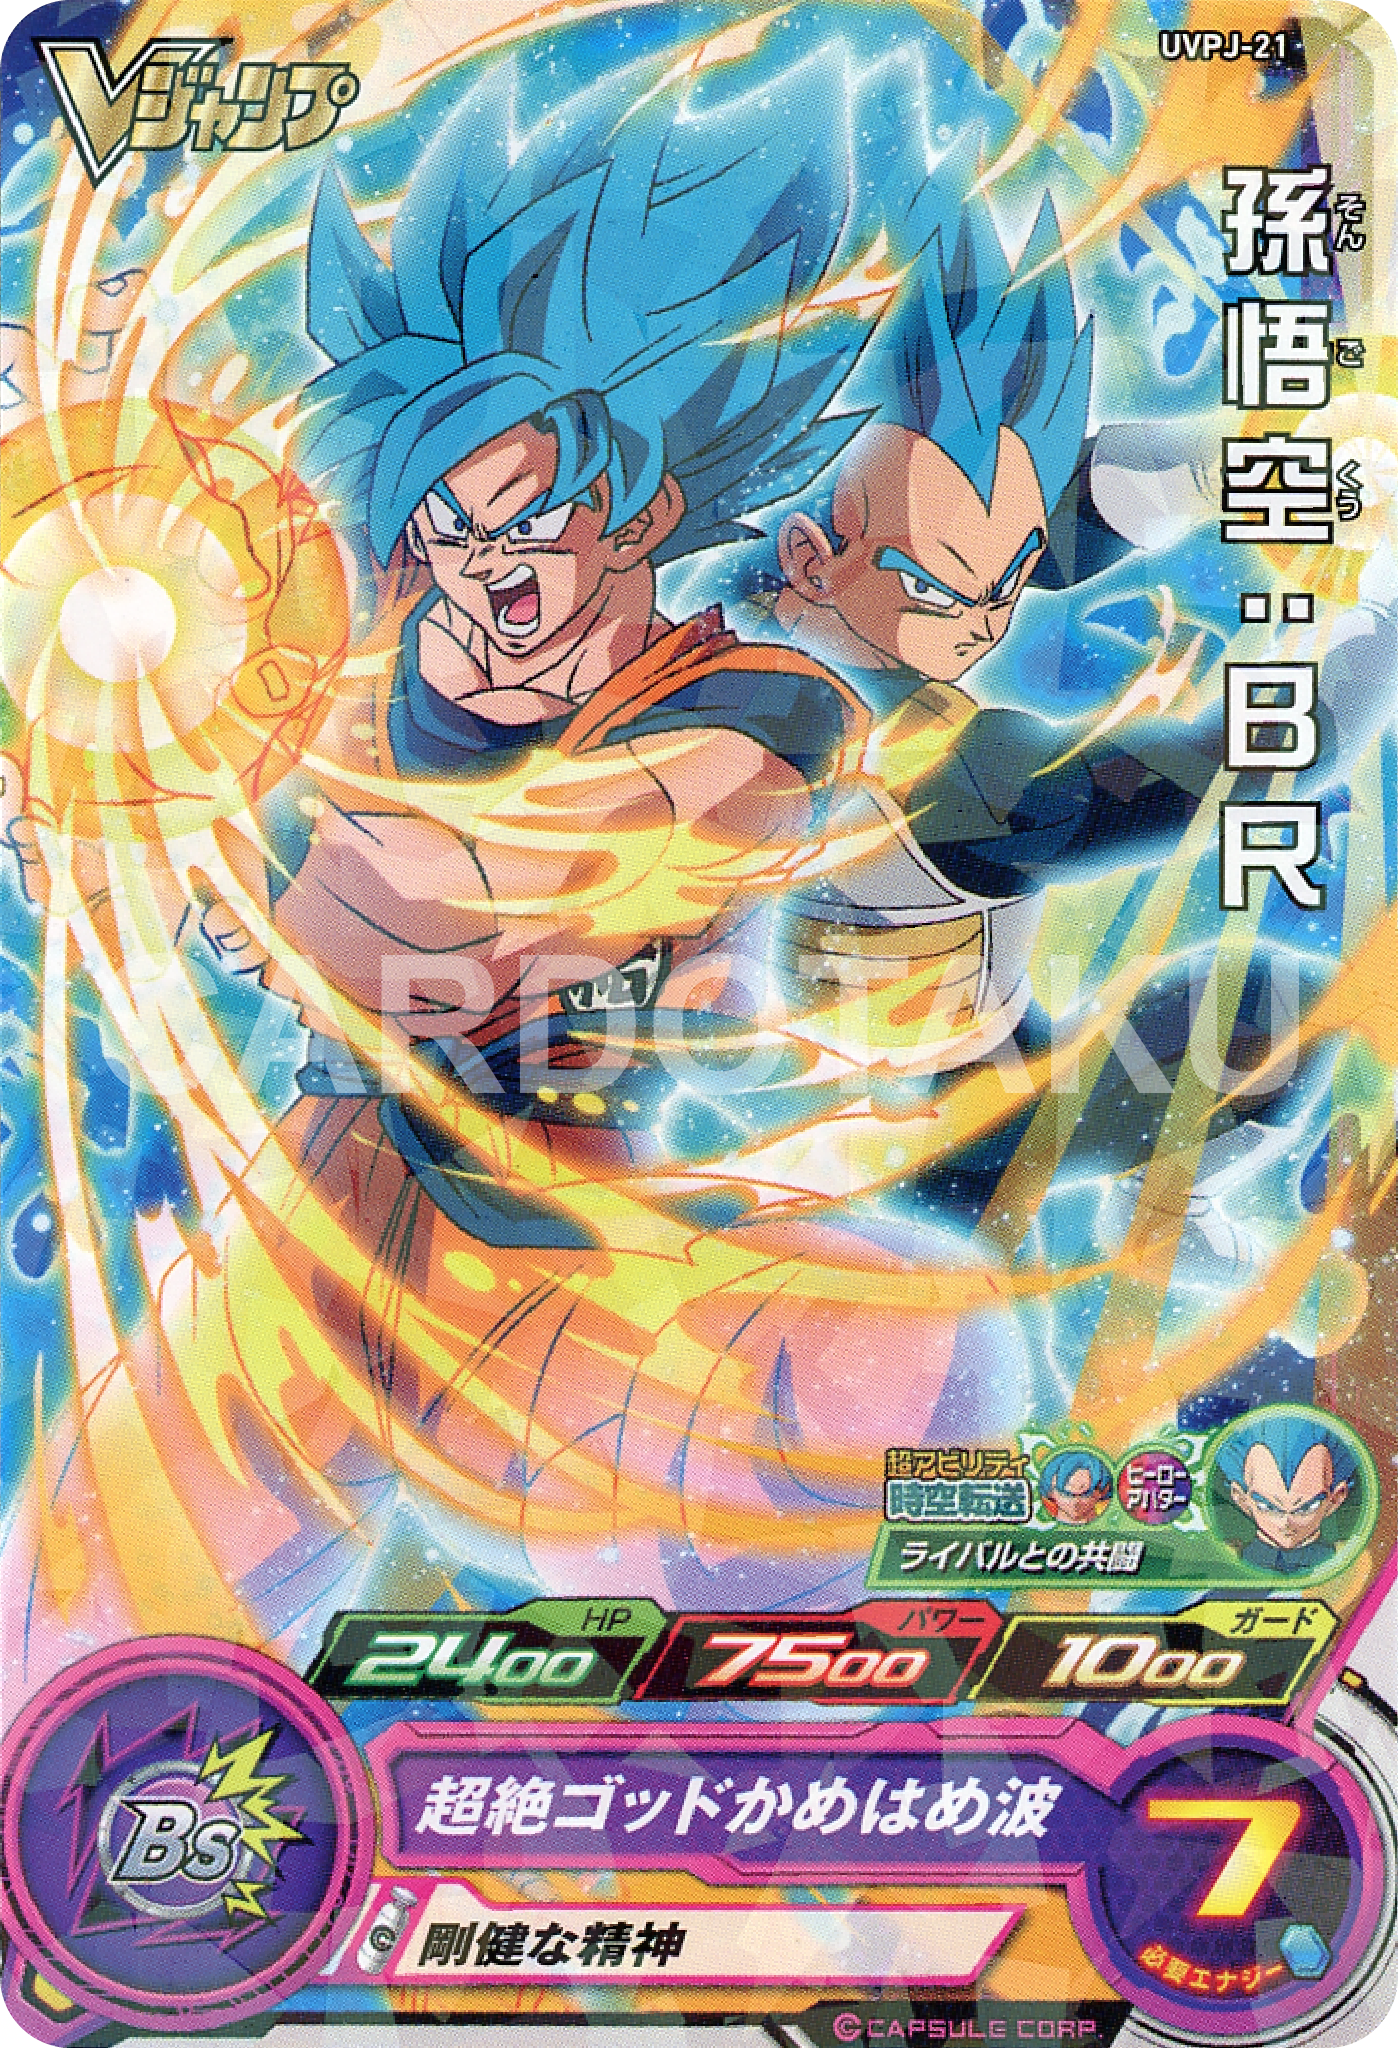 SUPER DRAGON BALL HEROES UVPJ-21 Son Goku : BR